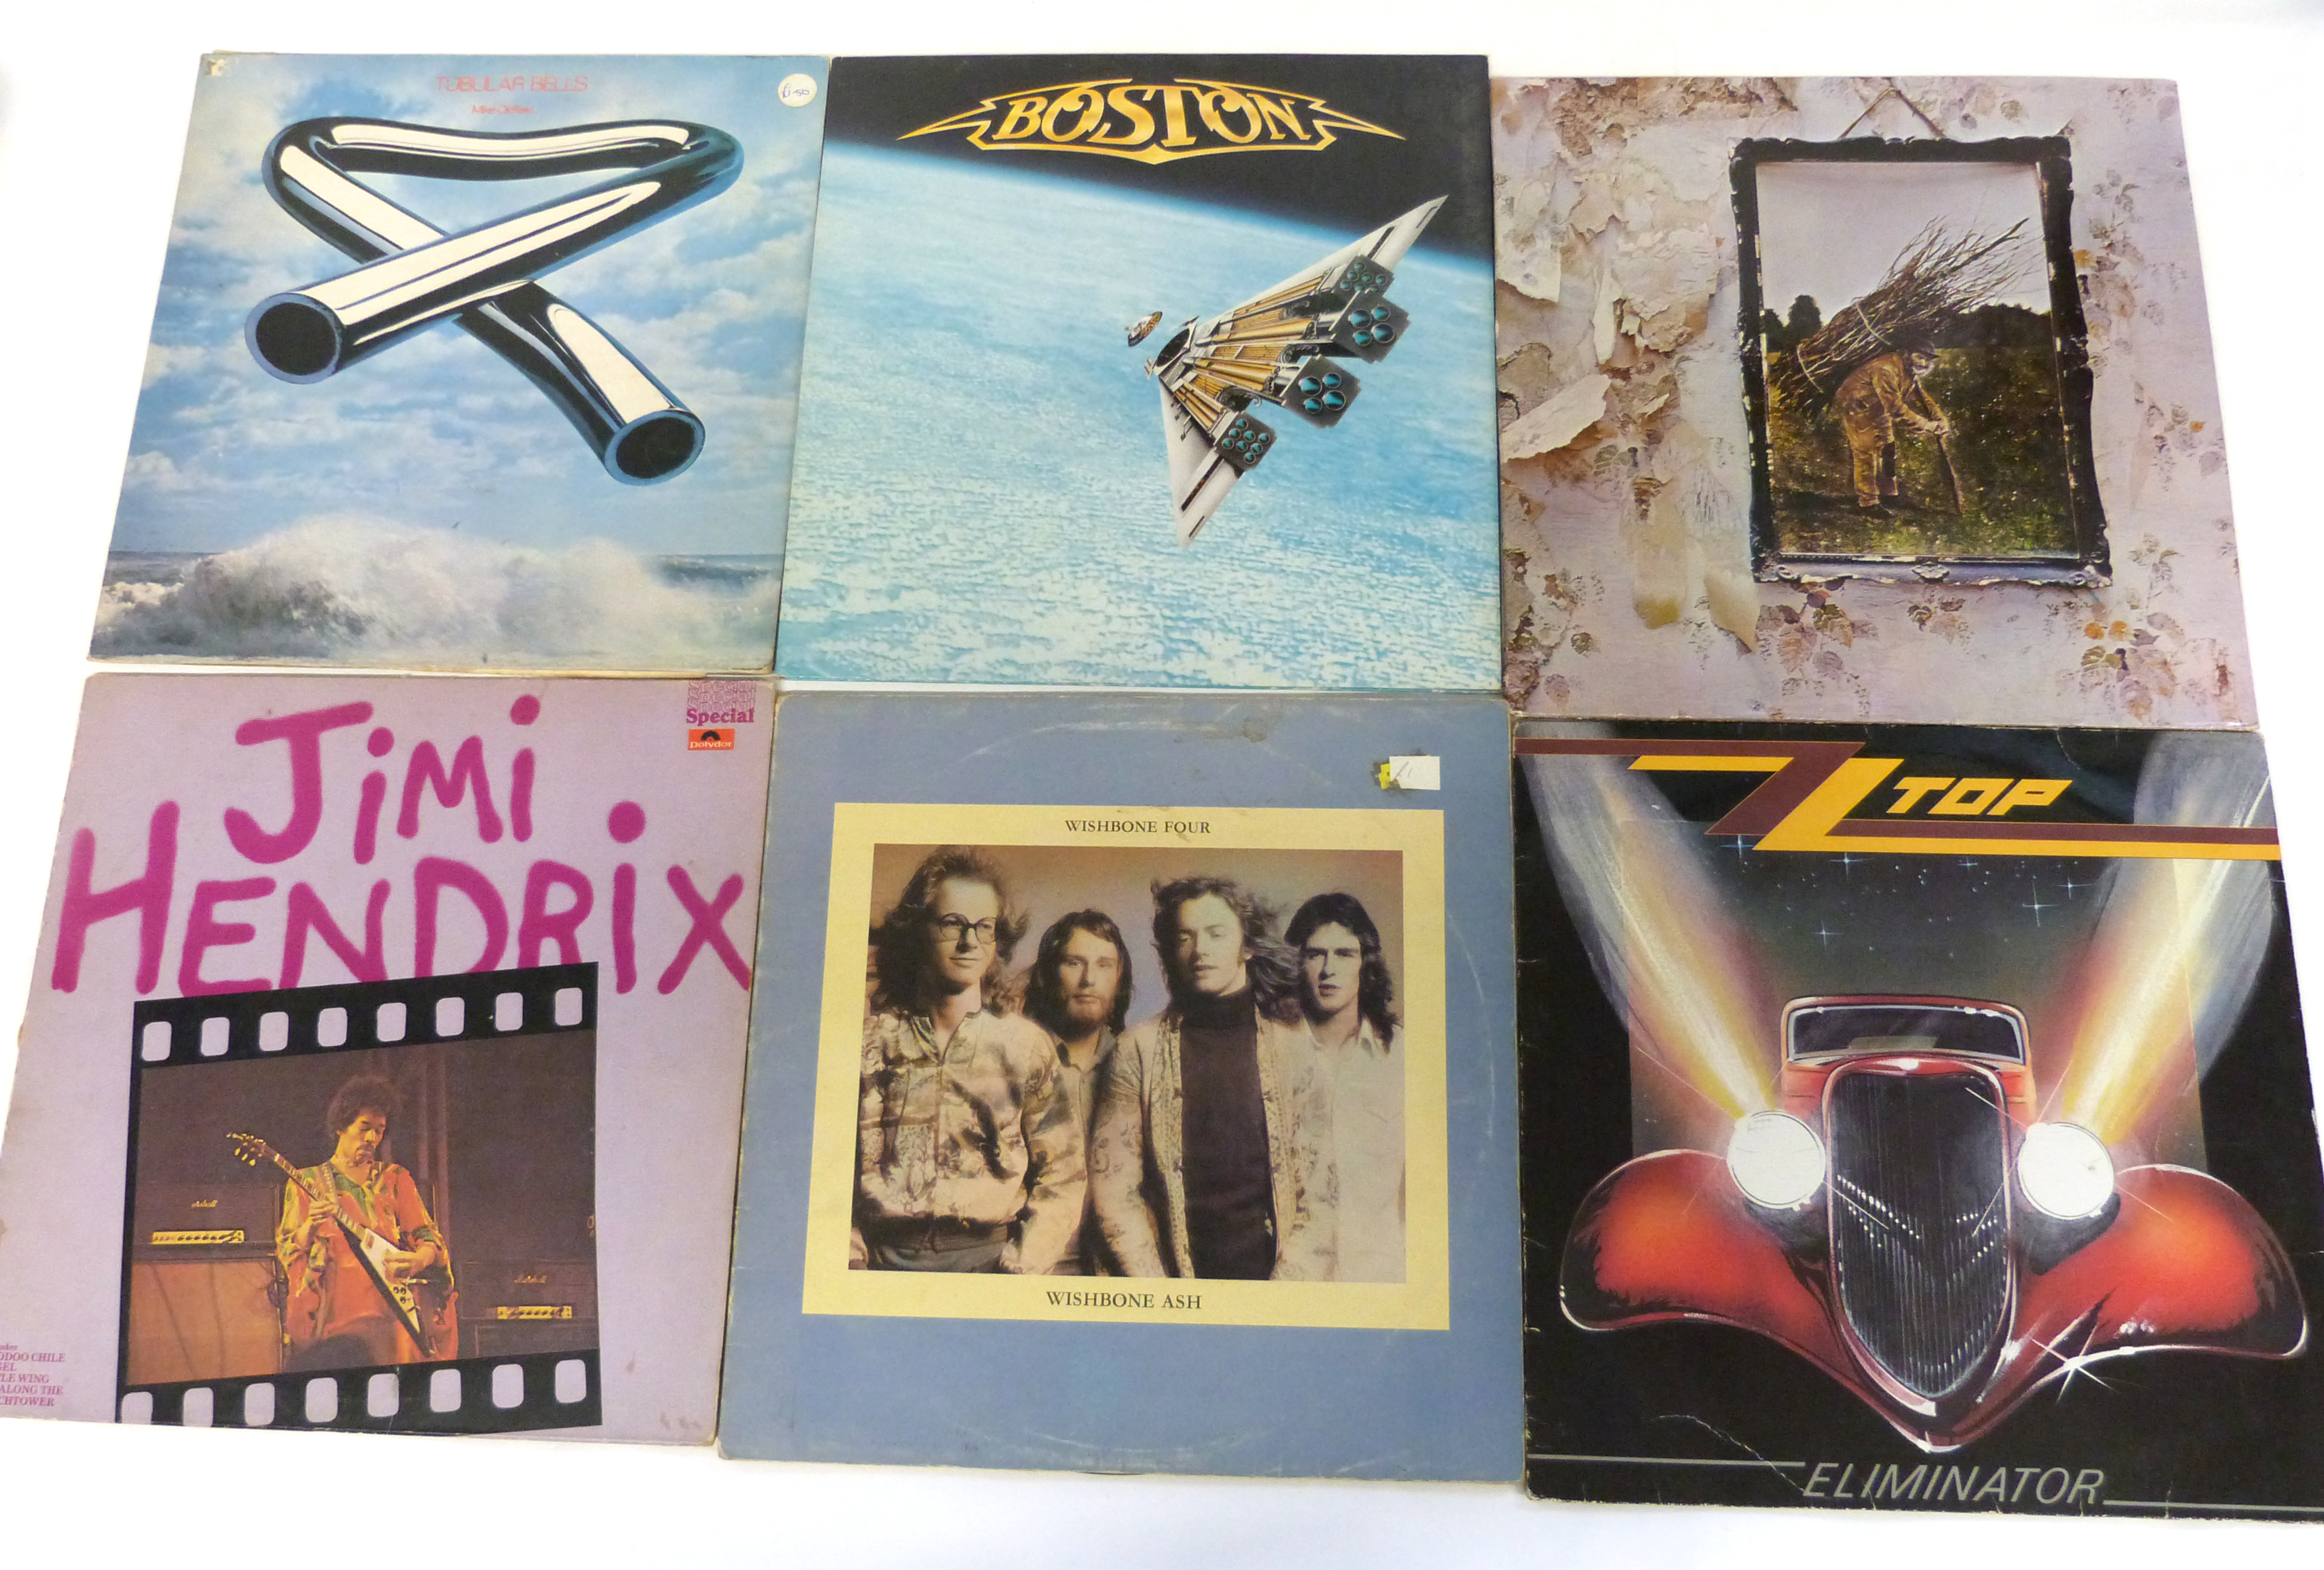 Twelve rock/prog albums to include Led Zeppelin, Wishbone Ash, Jimi Hendrix, the Beatles, Thin Lizzy